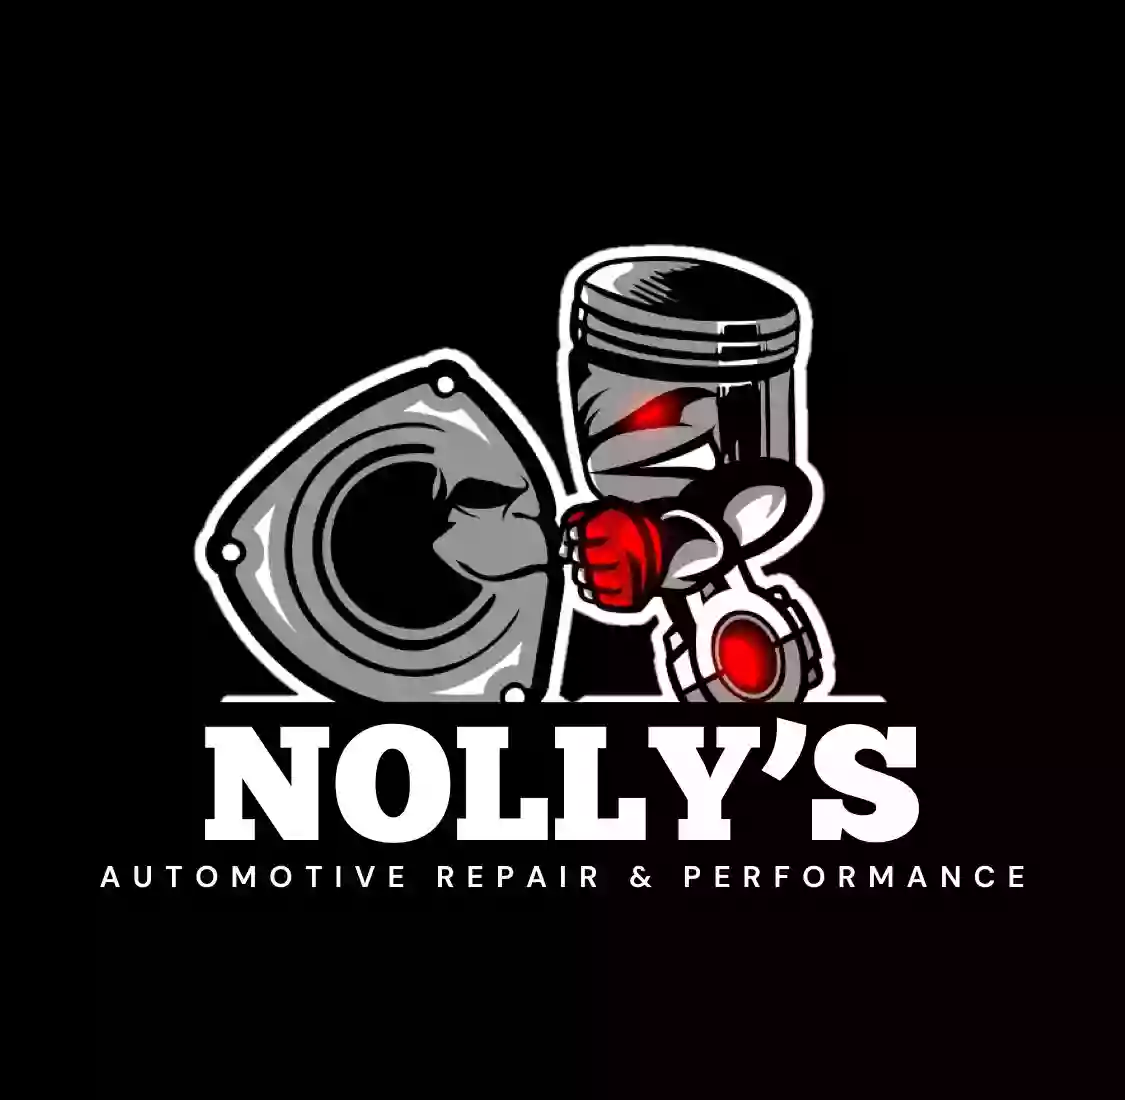 NOLLY'S Automotive Repair & Performance